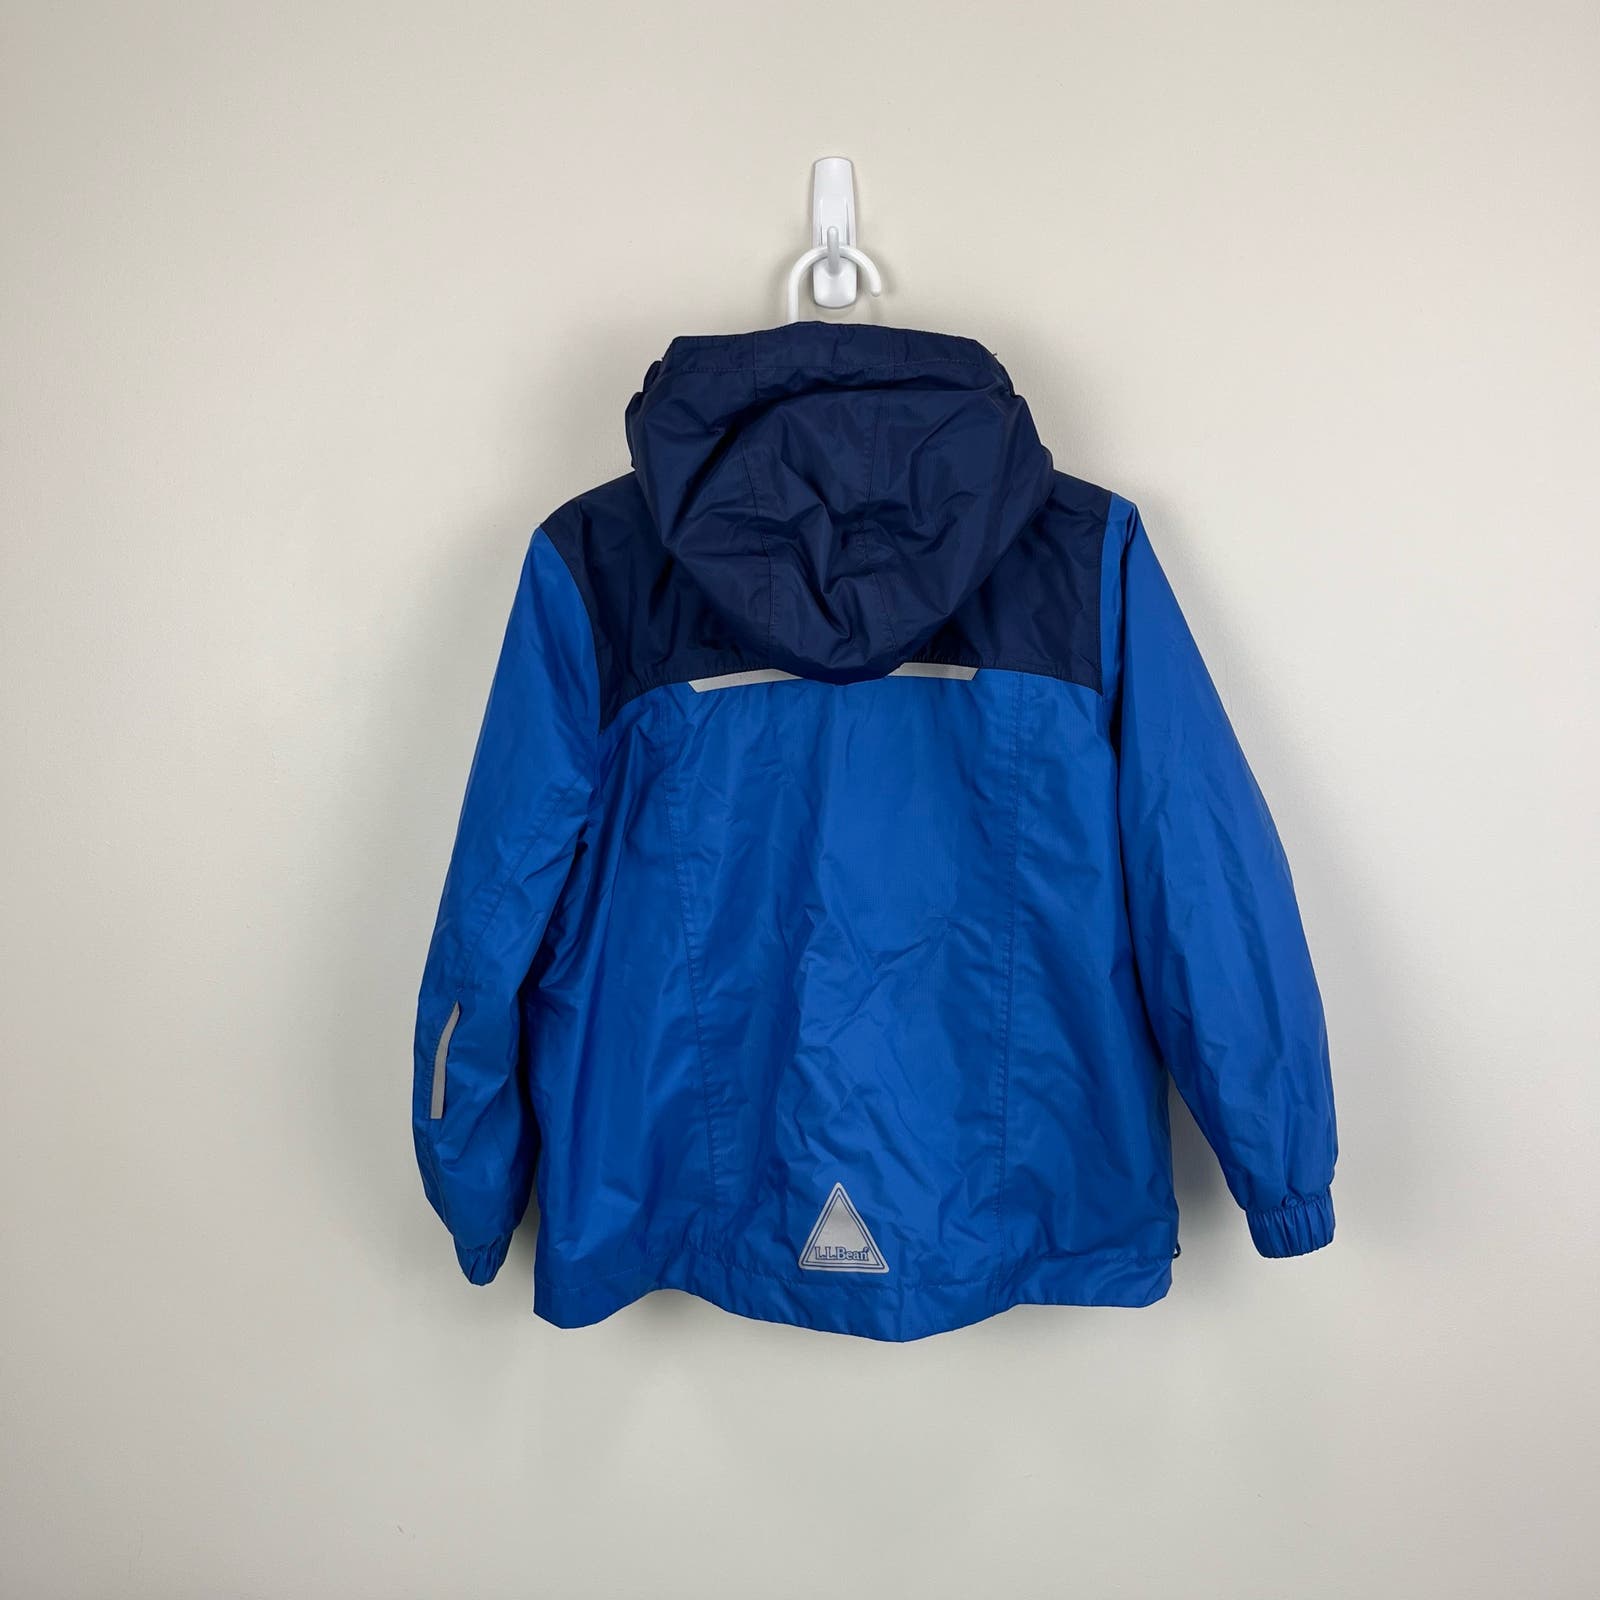 L.L. Bean Softshell Blue Jacket 4T